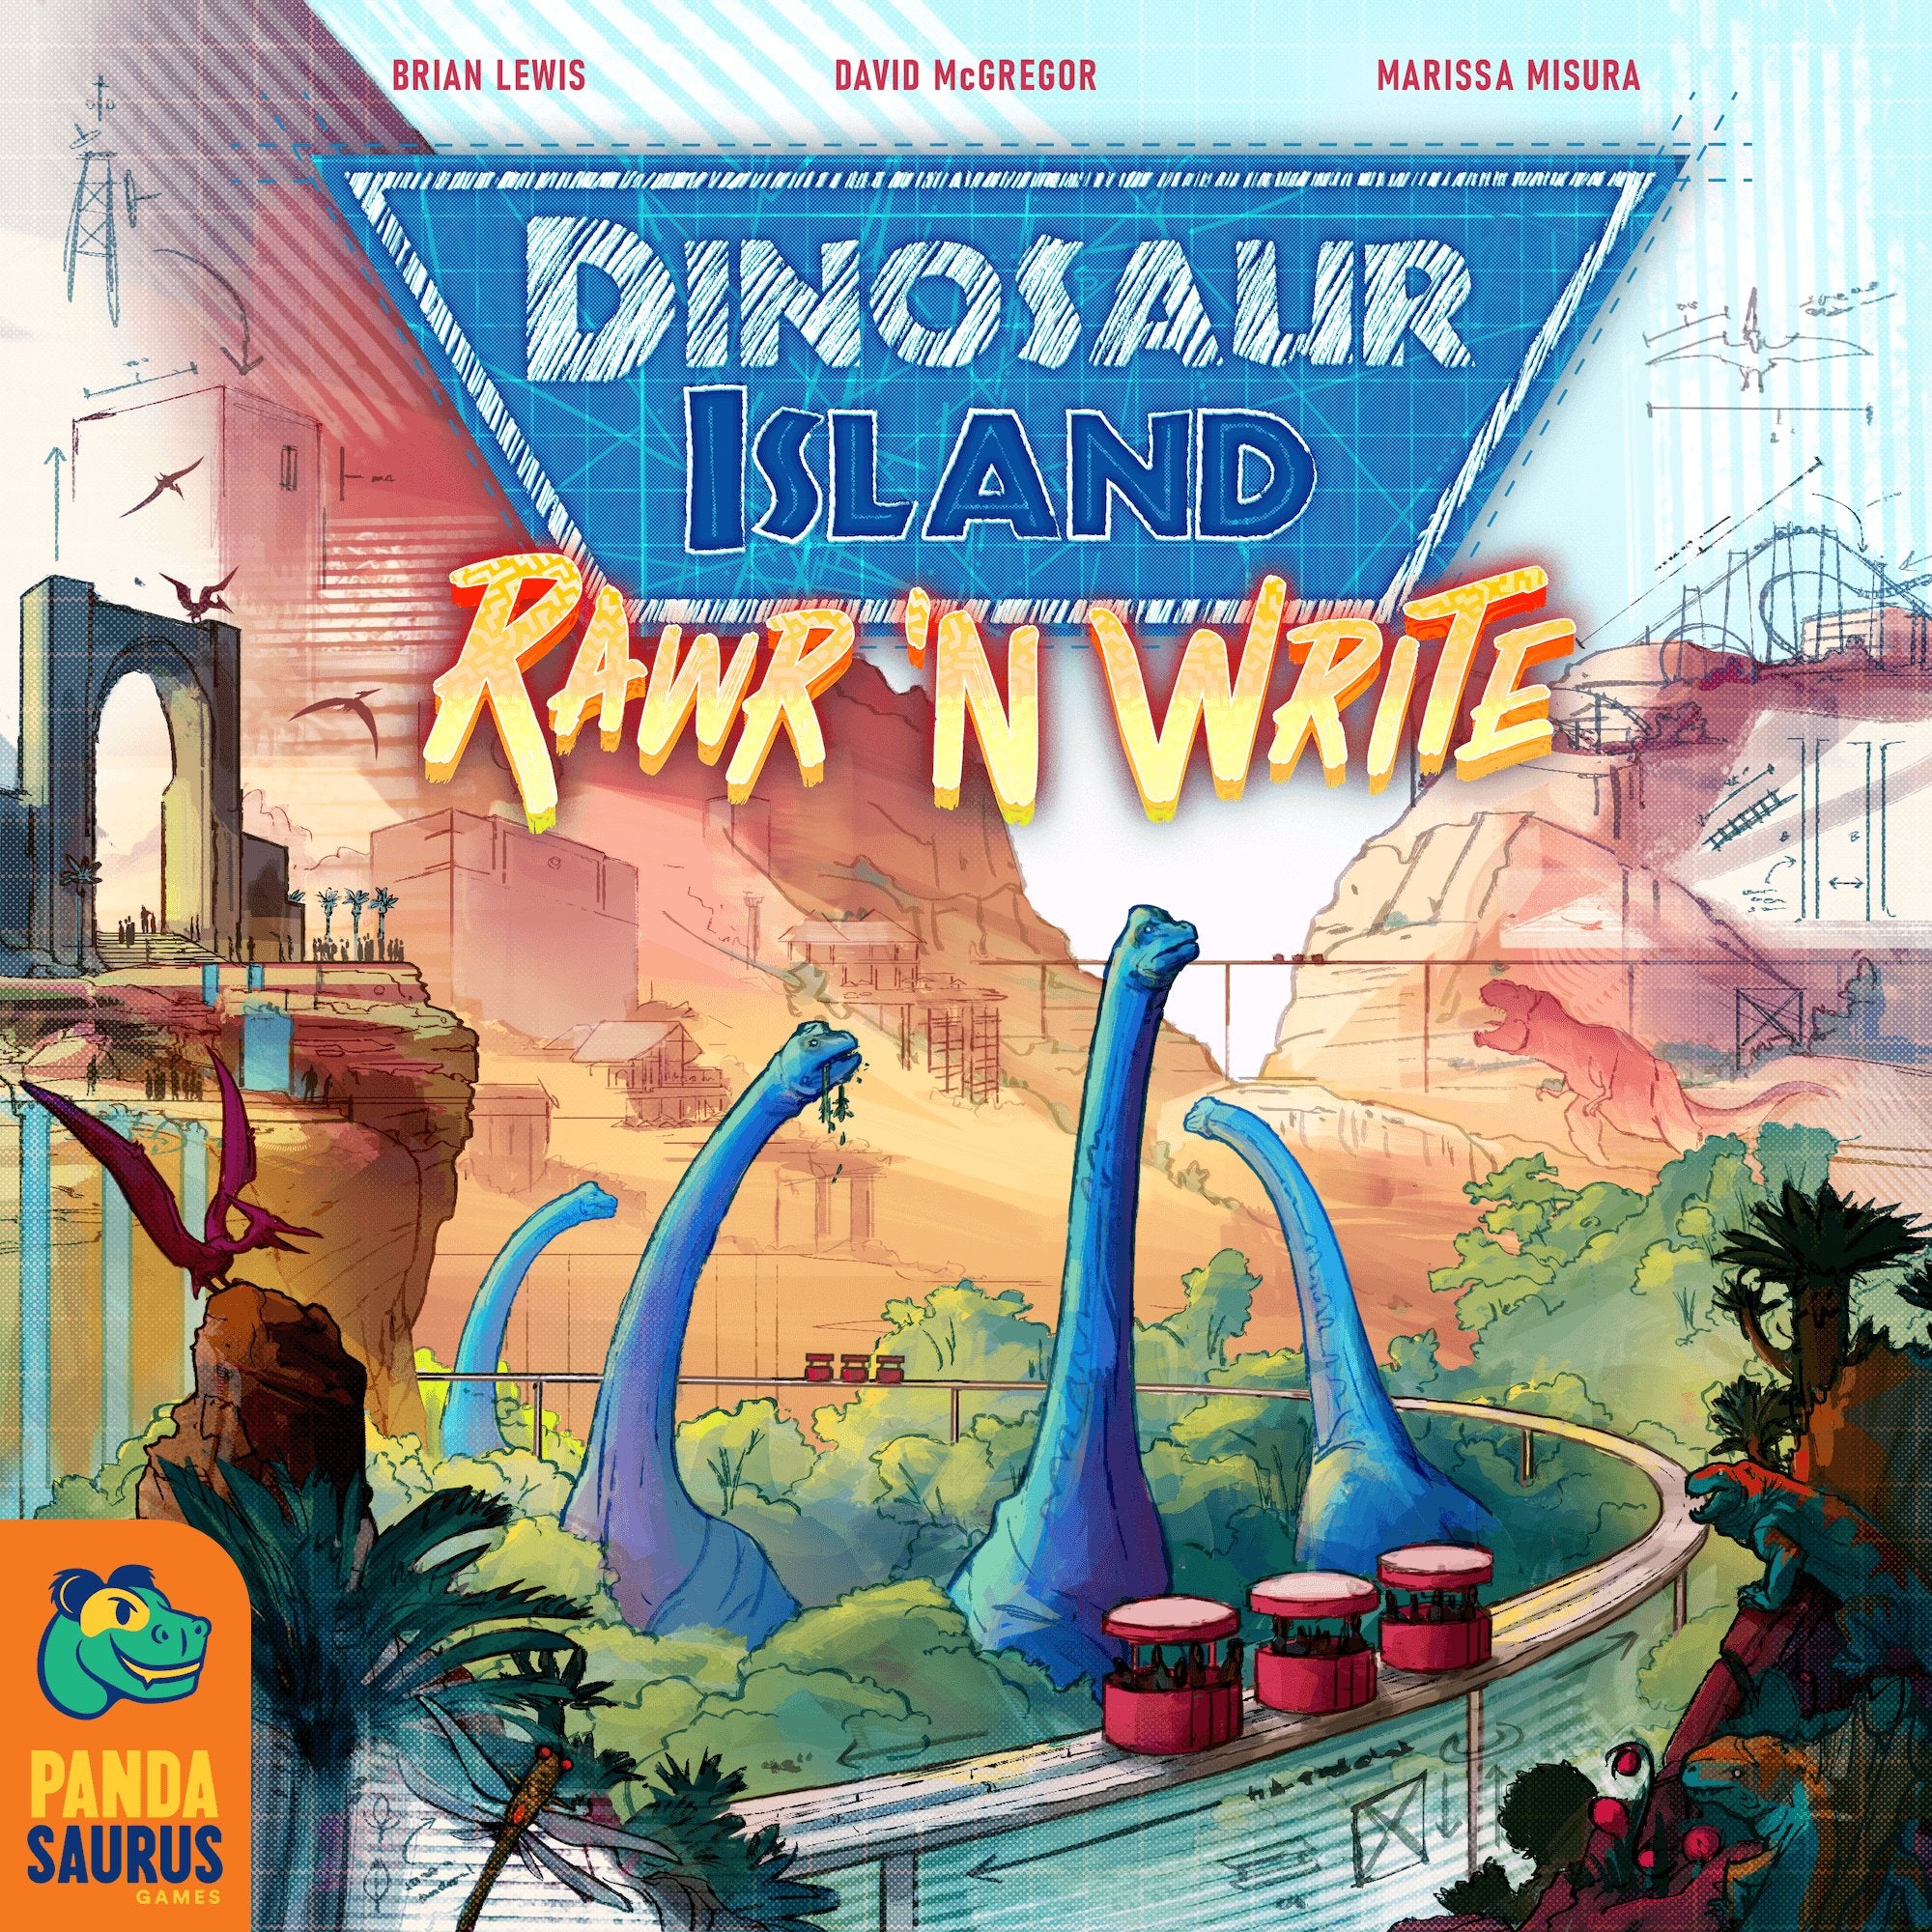 Dinosaur Island: Rawr 'n Write (Retail Edition) - Gaming Library